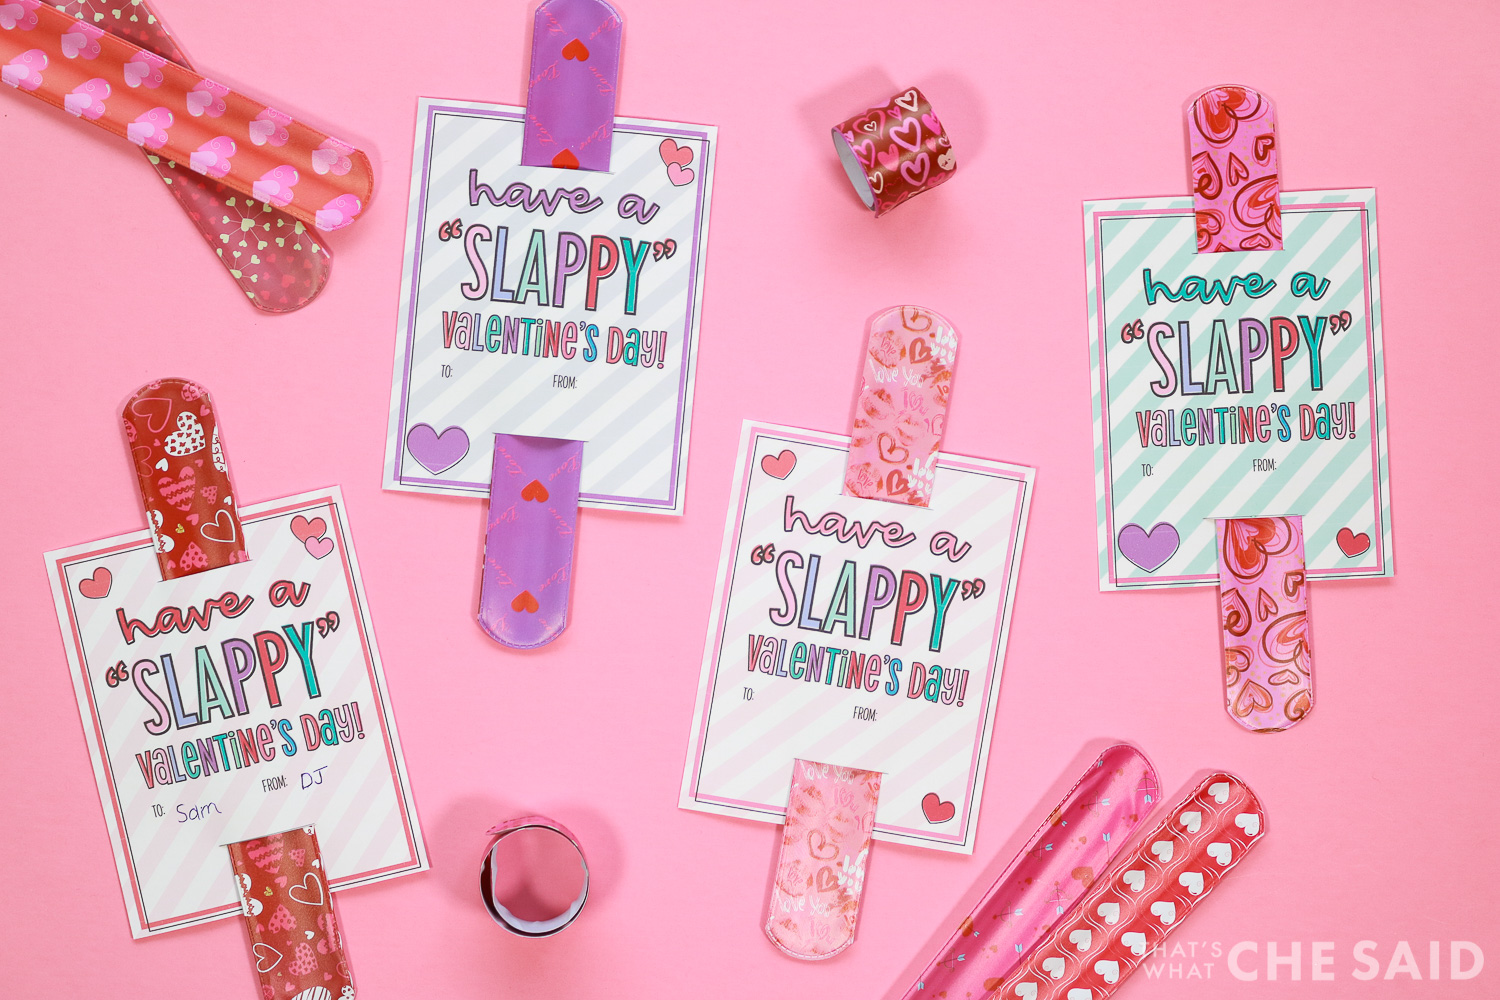 Slap Bracelet Valentines assembled on a pink background with extra slap bracelets surrounding them